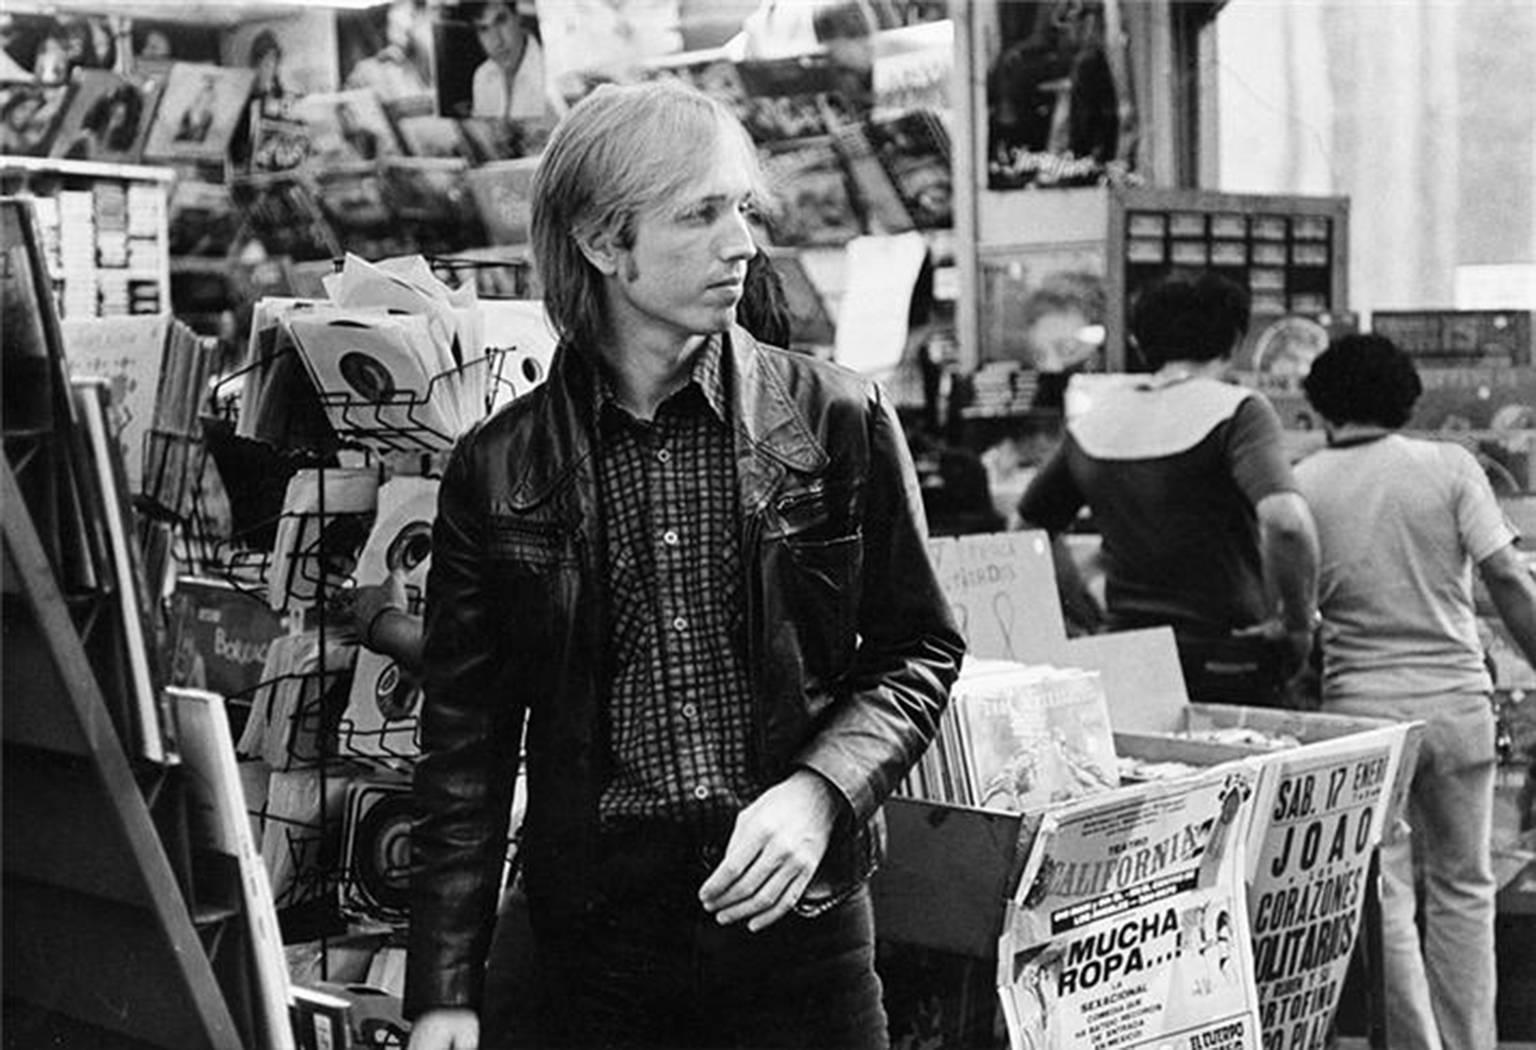 Joel Bernstein Black and White Photograph - Tom Petty, 1981